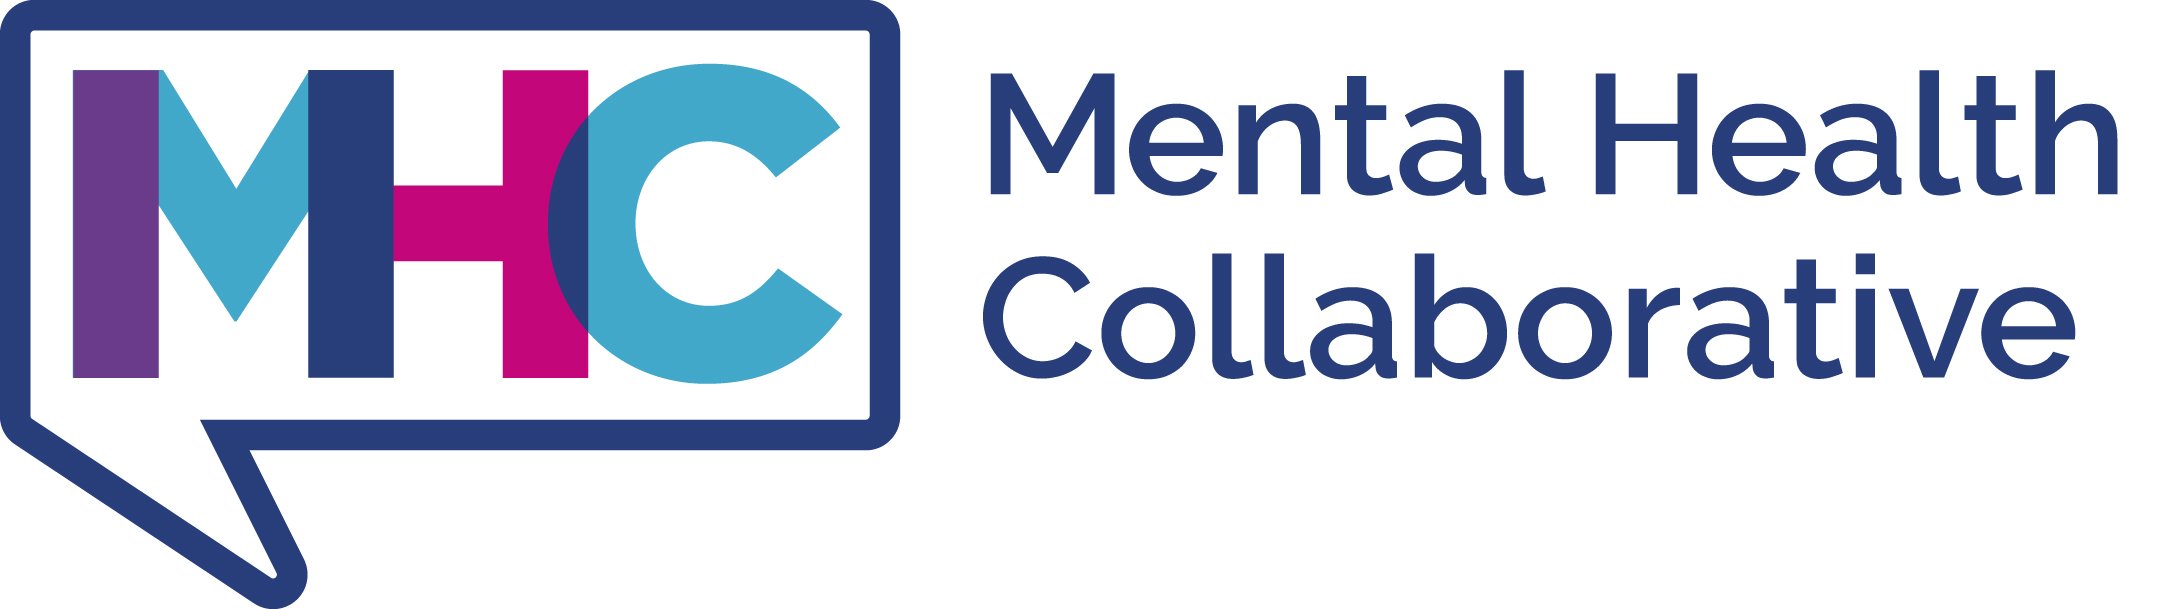 mentalhealthcollab - logo.jpg